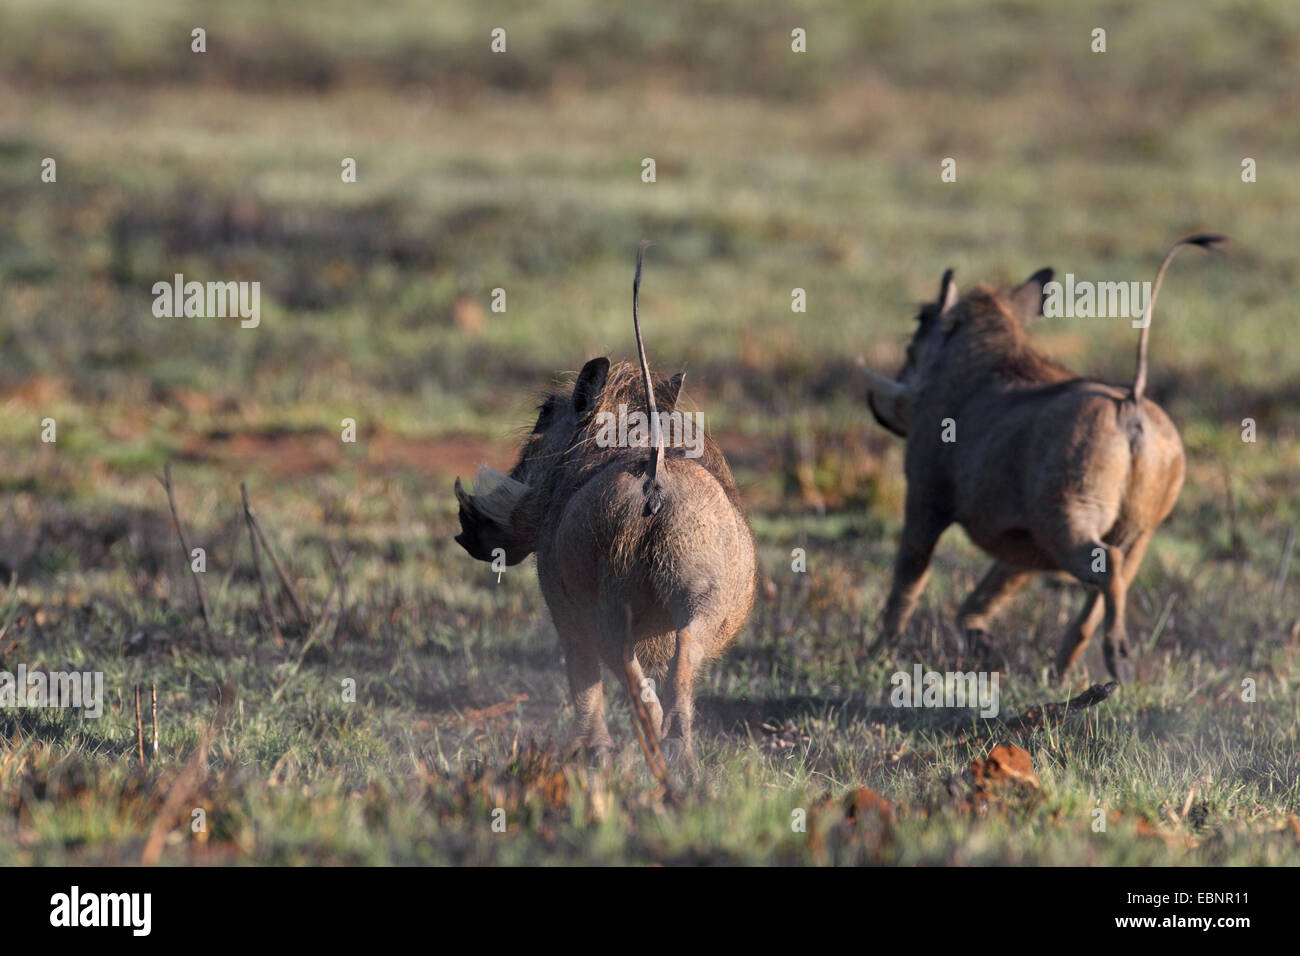 common warthog, savanna warthog (Phacochoerus africanus), two escaping warthogs, back view, South Africa, Pilanesberg National Park Stock Photo